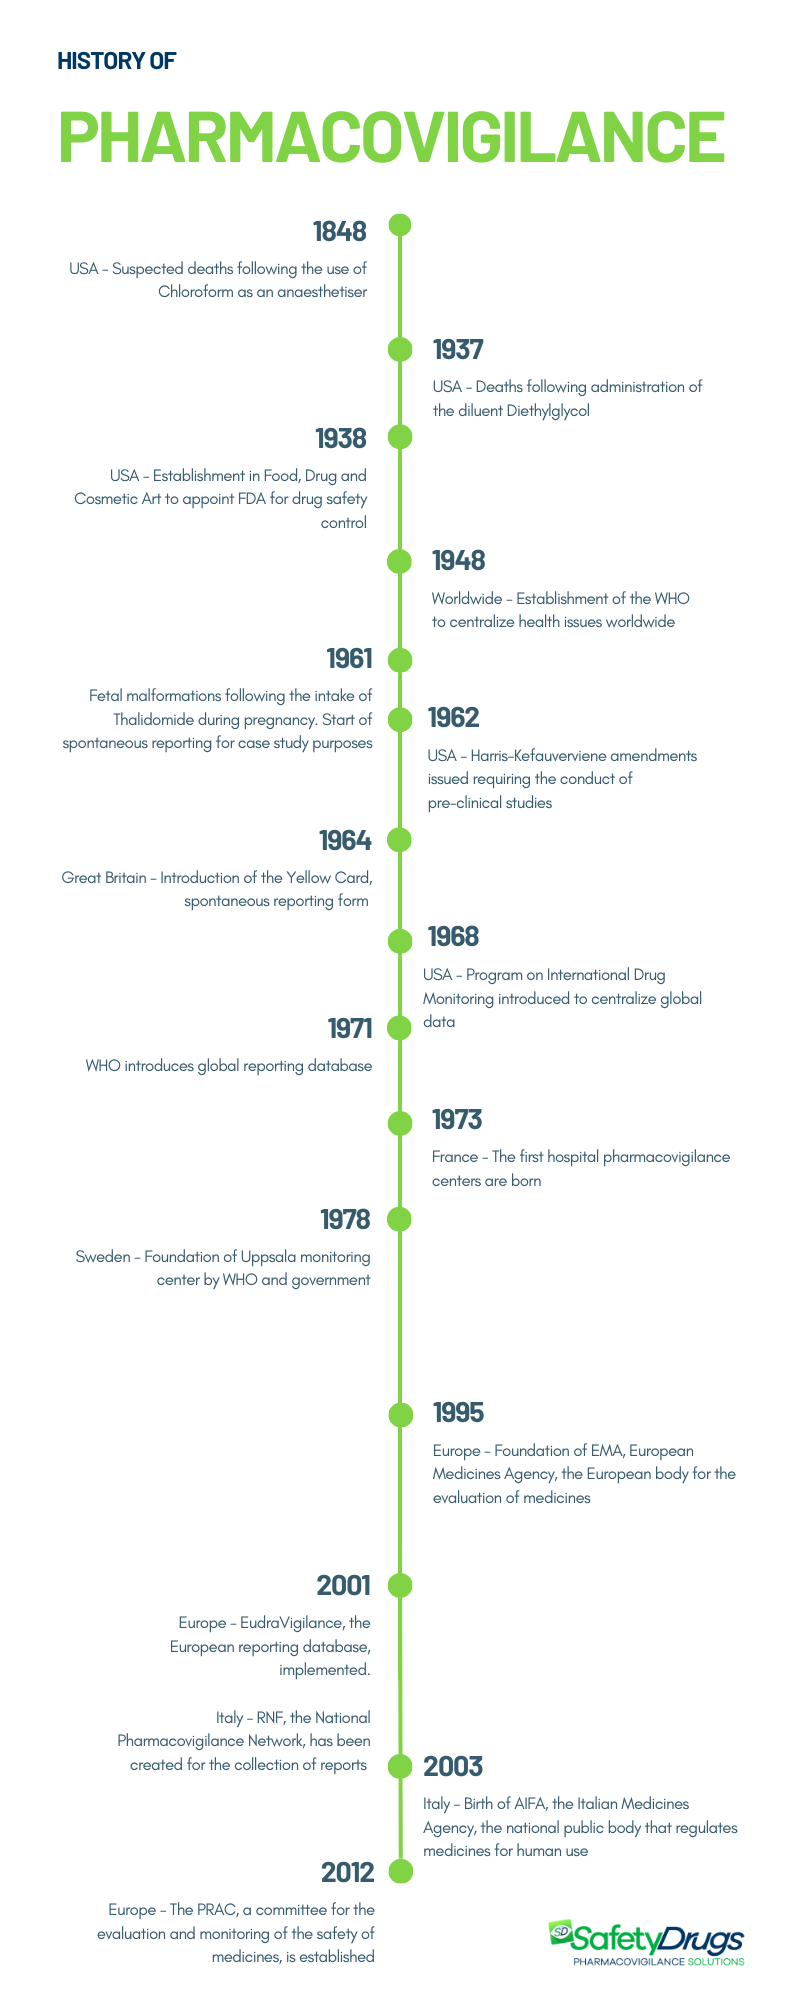 History of pharmacovigilance - Timeline